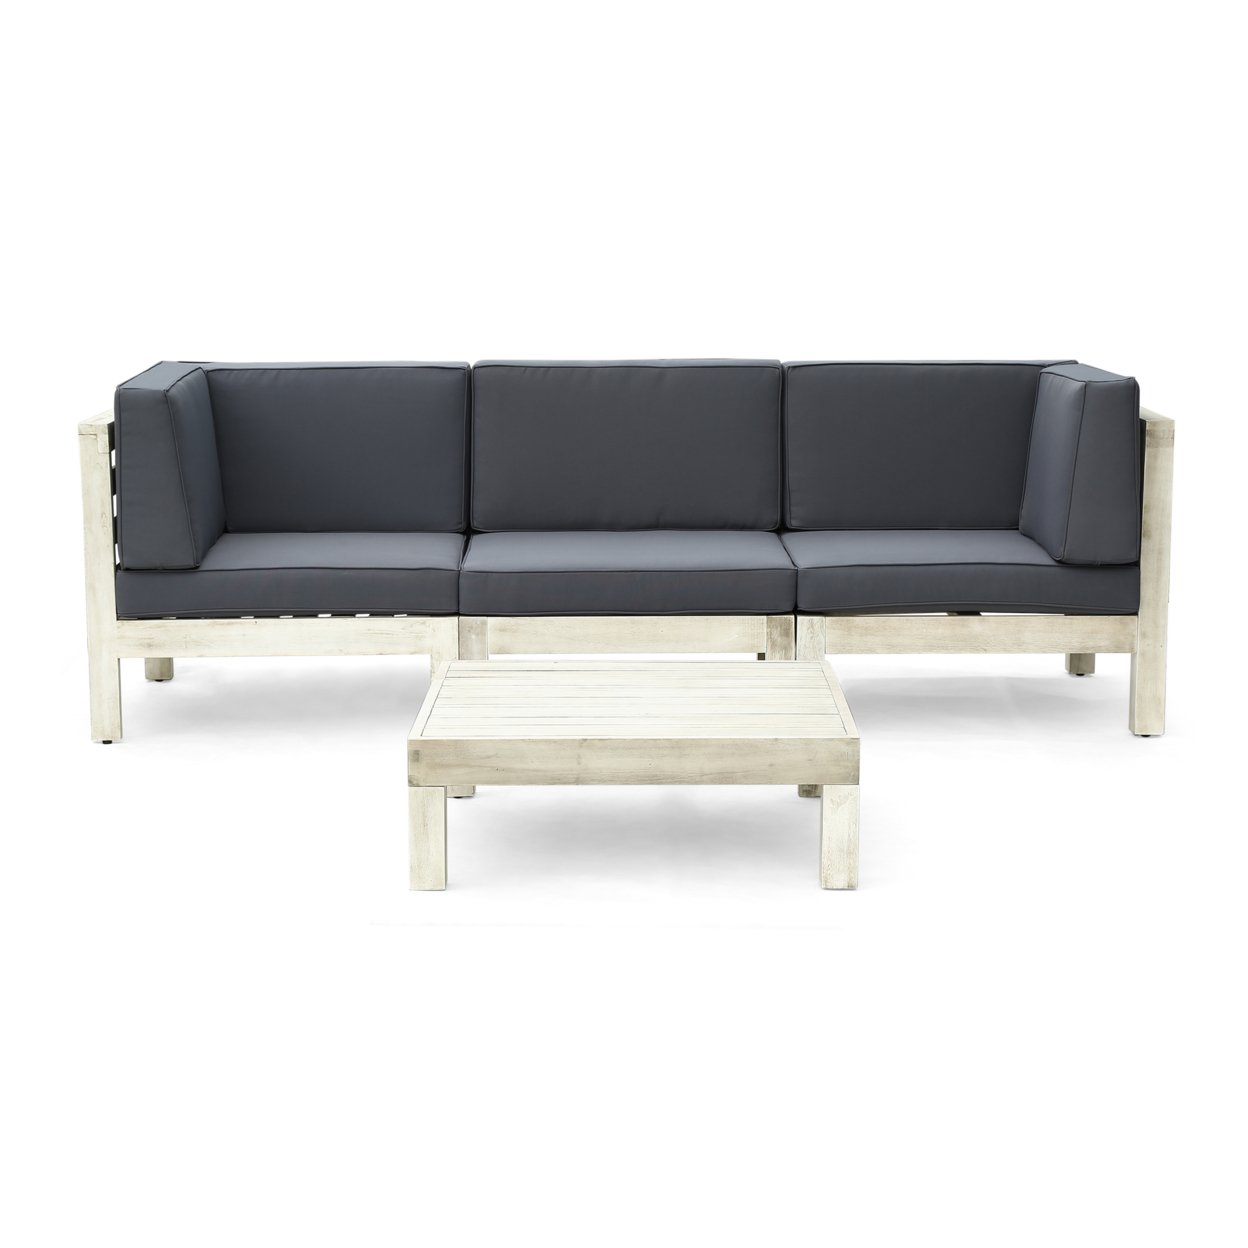 Brava Outdoor Modular Acacia Wood Sofa And Coffee Table Set With Cushions - Dark Gray